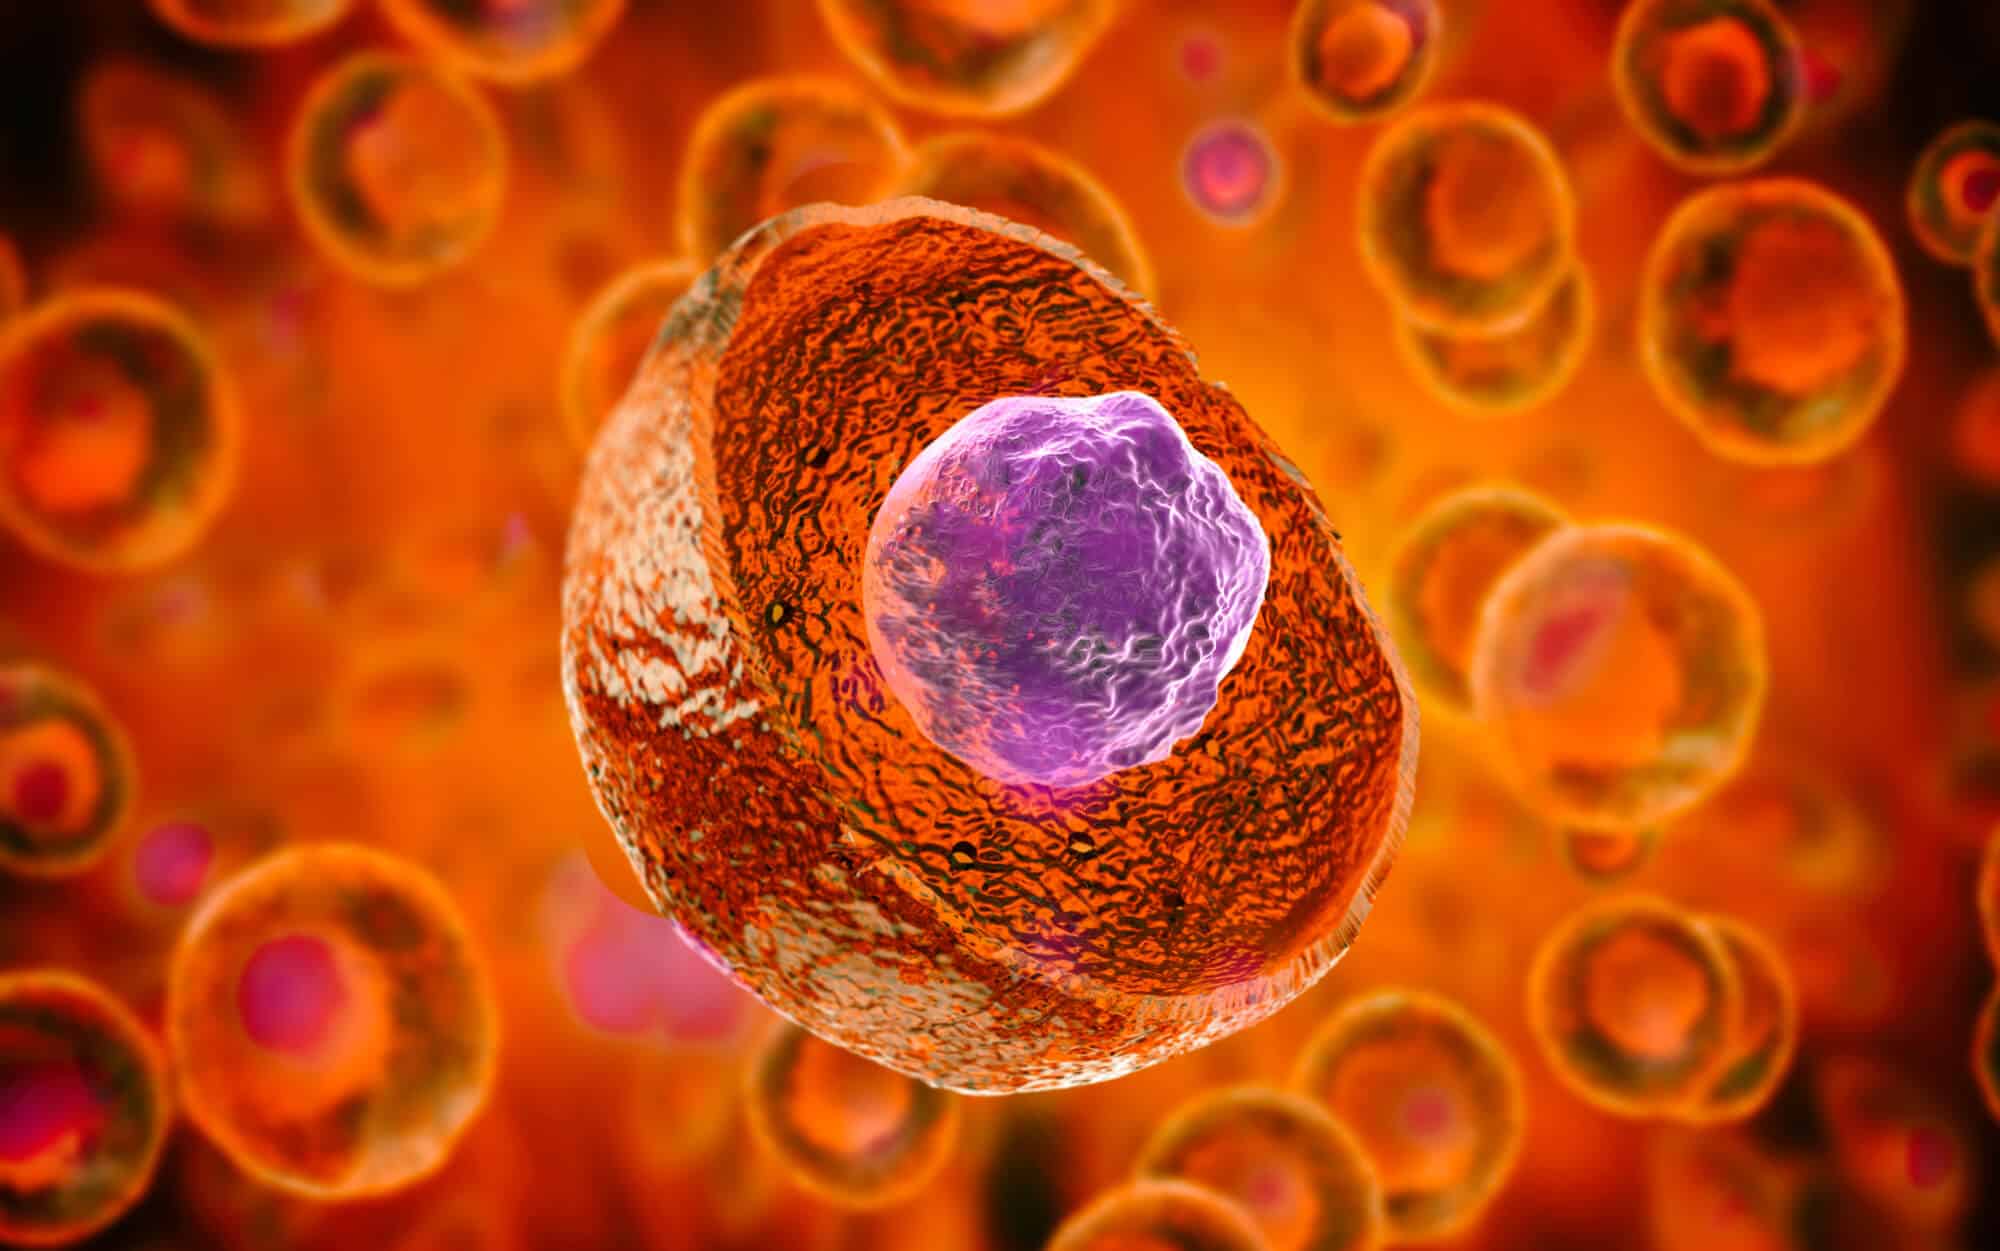 Embryonic stem cells. Illustration: depositphotos.com